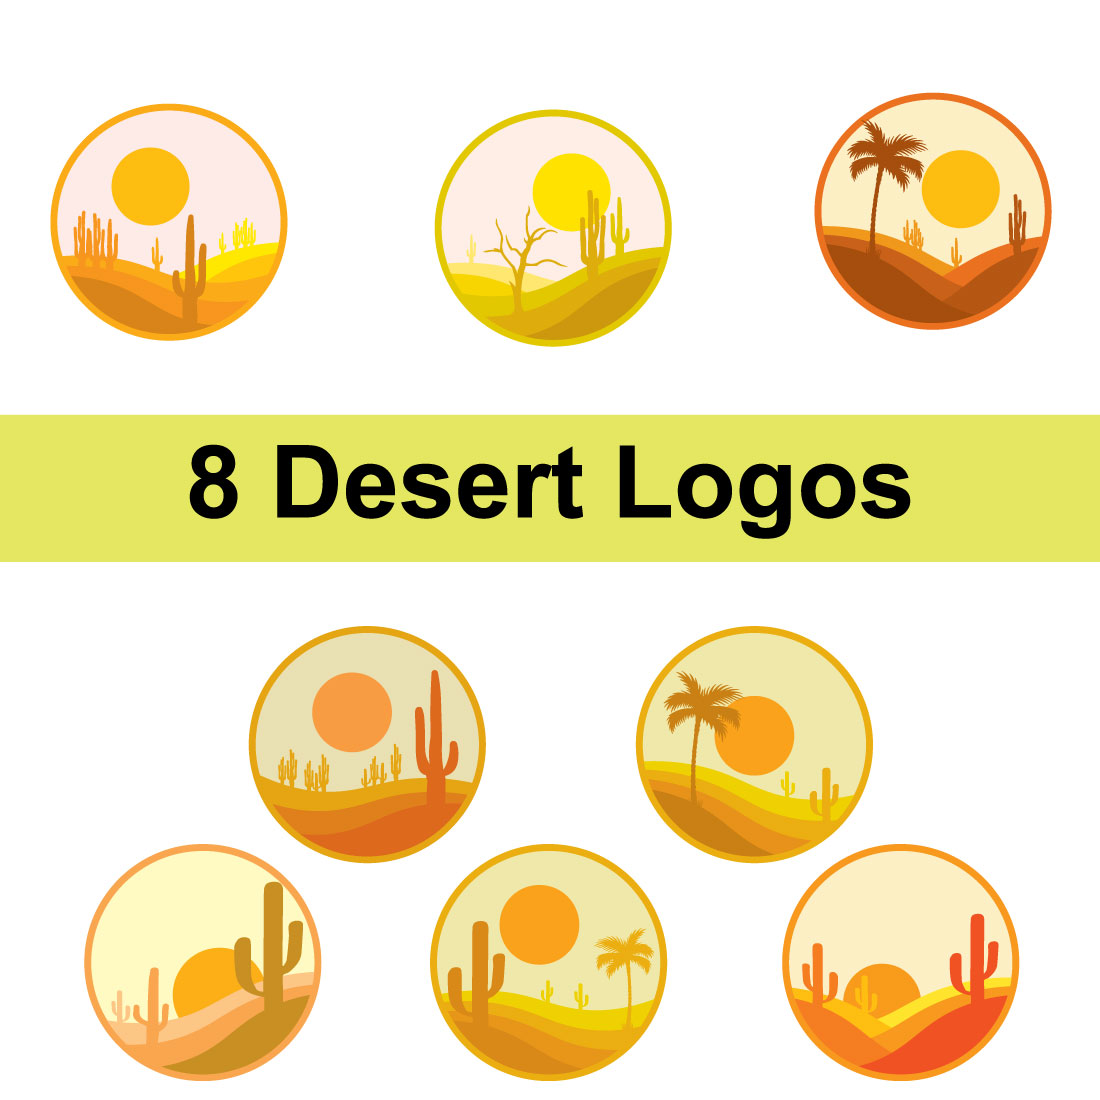 8 Desert Logos preview image.